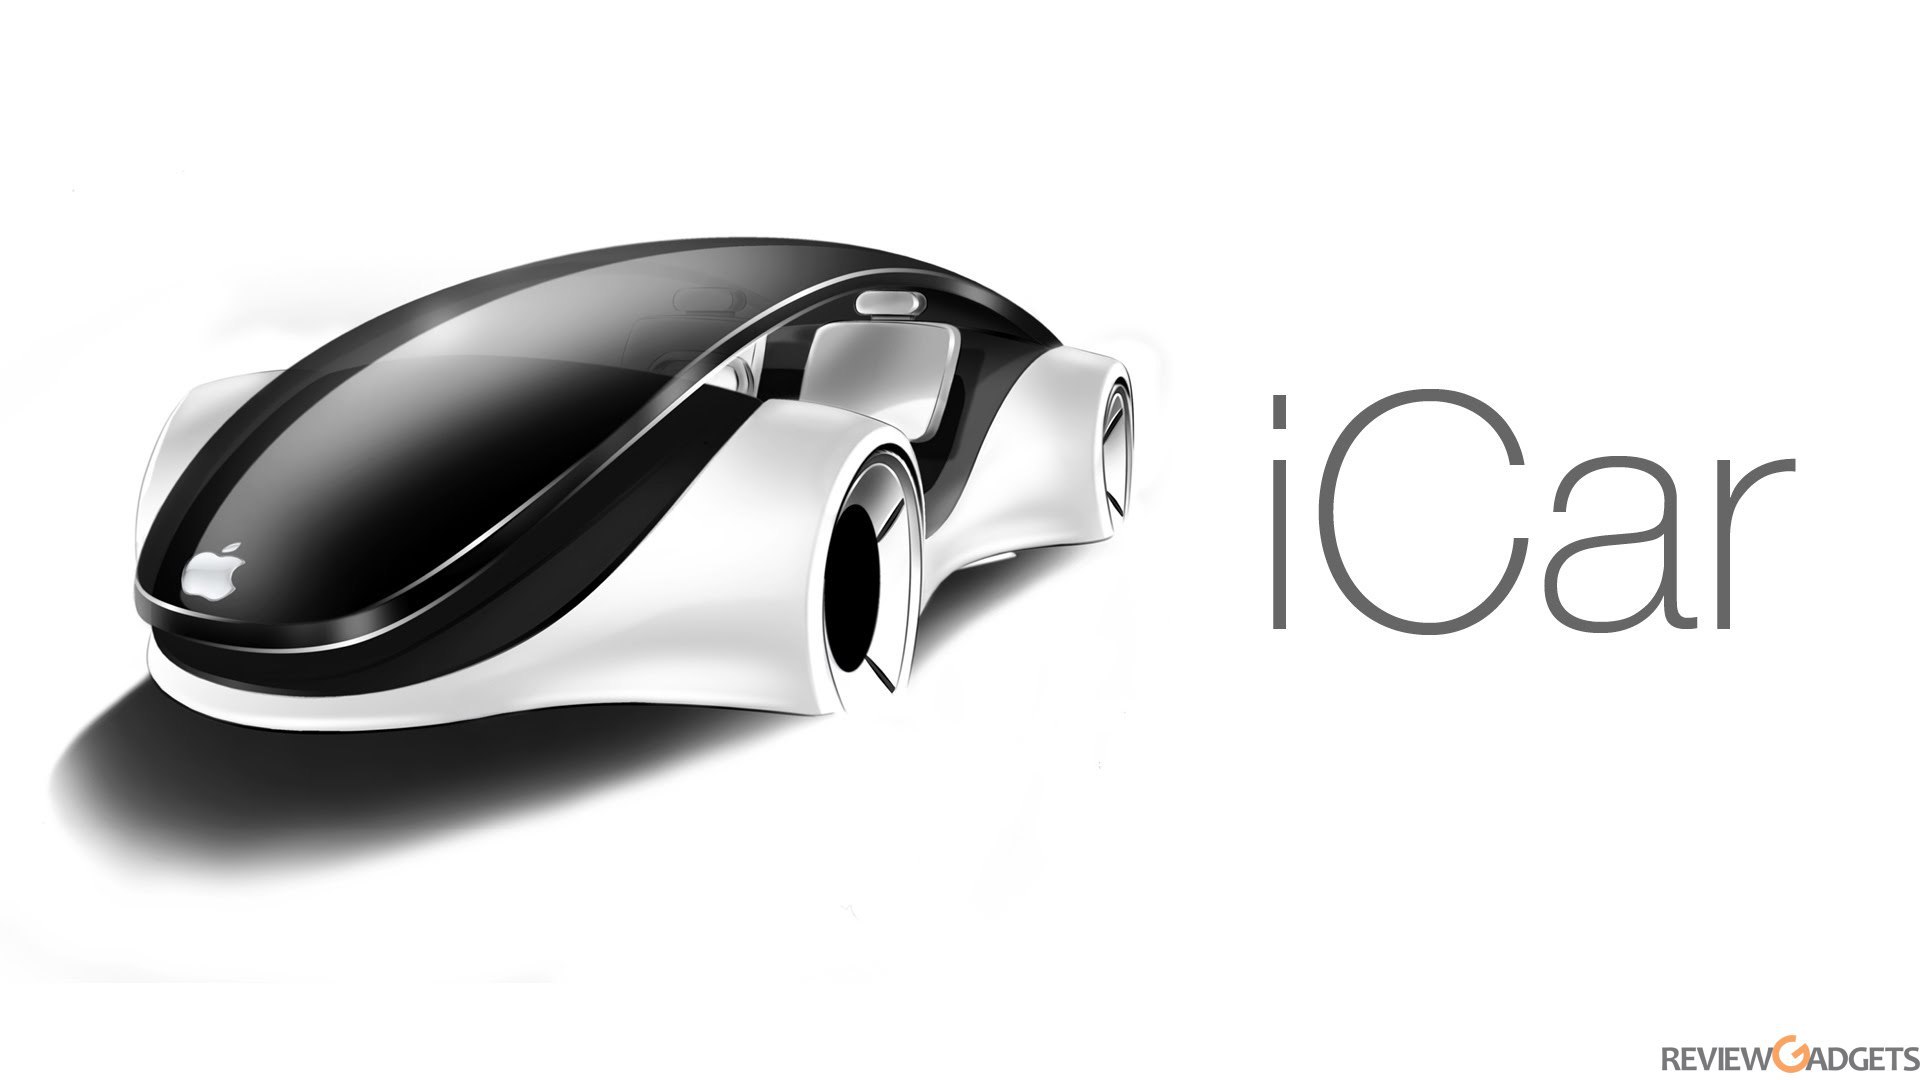 Apple Car Project Titan